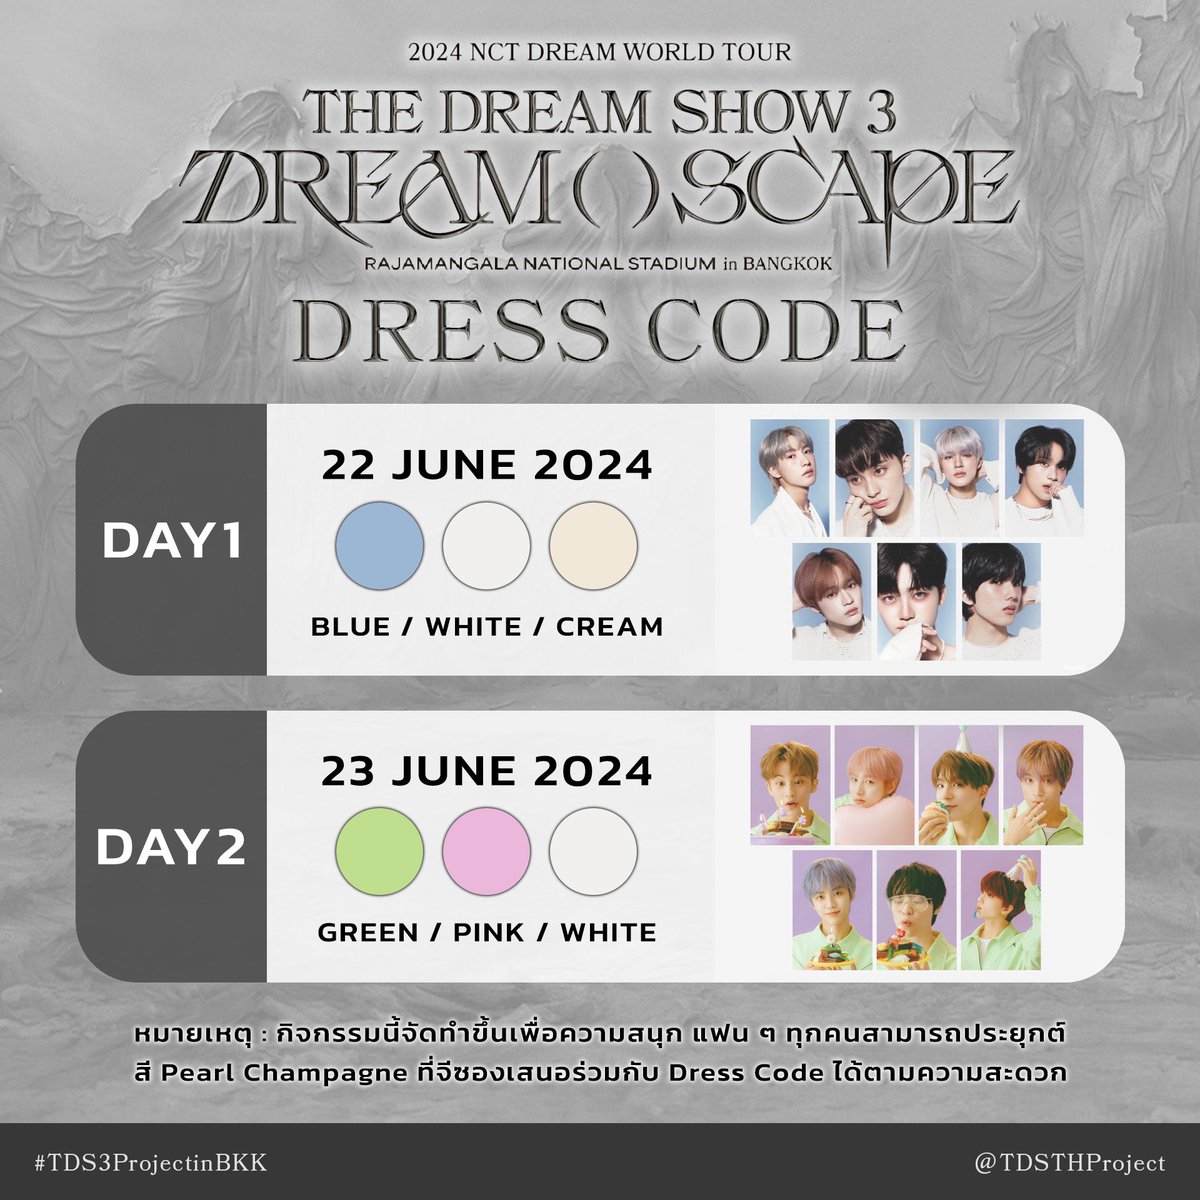 2024 NCT DREAM WORLD TOUR <THE DREAM SHOW 3 : DREAM( )SCAPE> in BANGKOK

💁🏻‍♀️ ท๊าดาา~ ใครยังไม่มีไอเดียแต่งตัว แนะนำดู Dress Code จากพวกเรา จับนั่นผสมนี่ 🥄🥄ไปเรื่อยๆ เป็น Smoothie 🥤🥤🥤แล้วมาโชว์รสชาติที่ทุกคนเลือกผ่านชุด ณ ราชมังราชใจกันค่ะ! 💃🏻🪩

#NCTDREAM_THEDREAMSHOW3_in_BKK